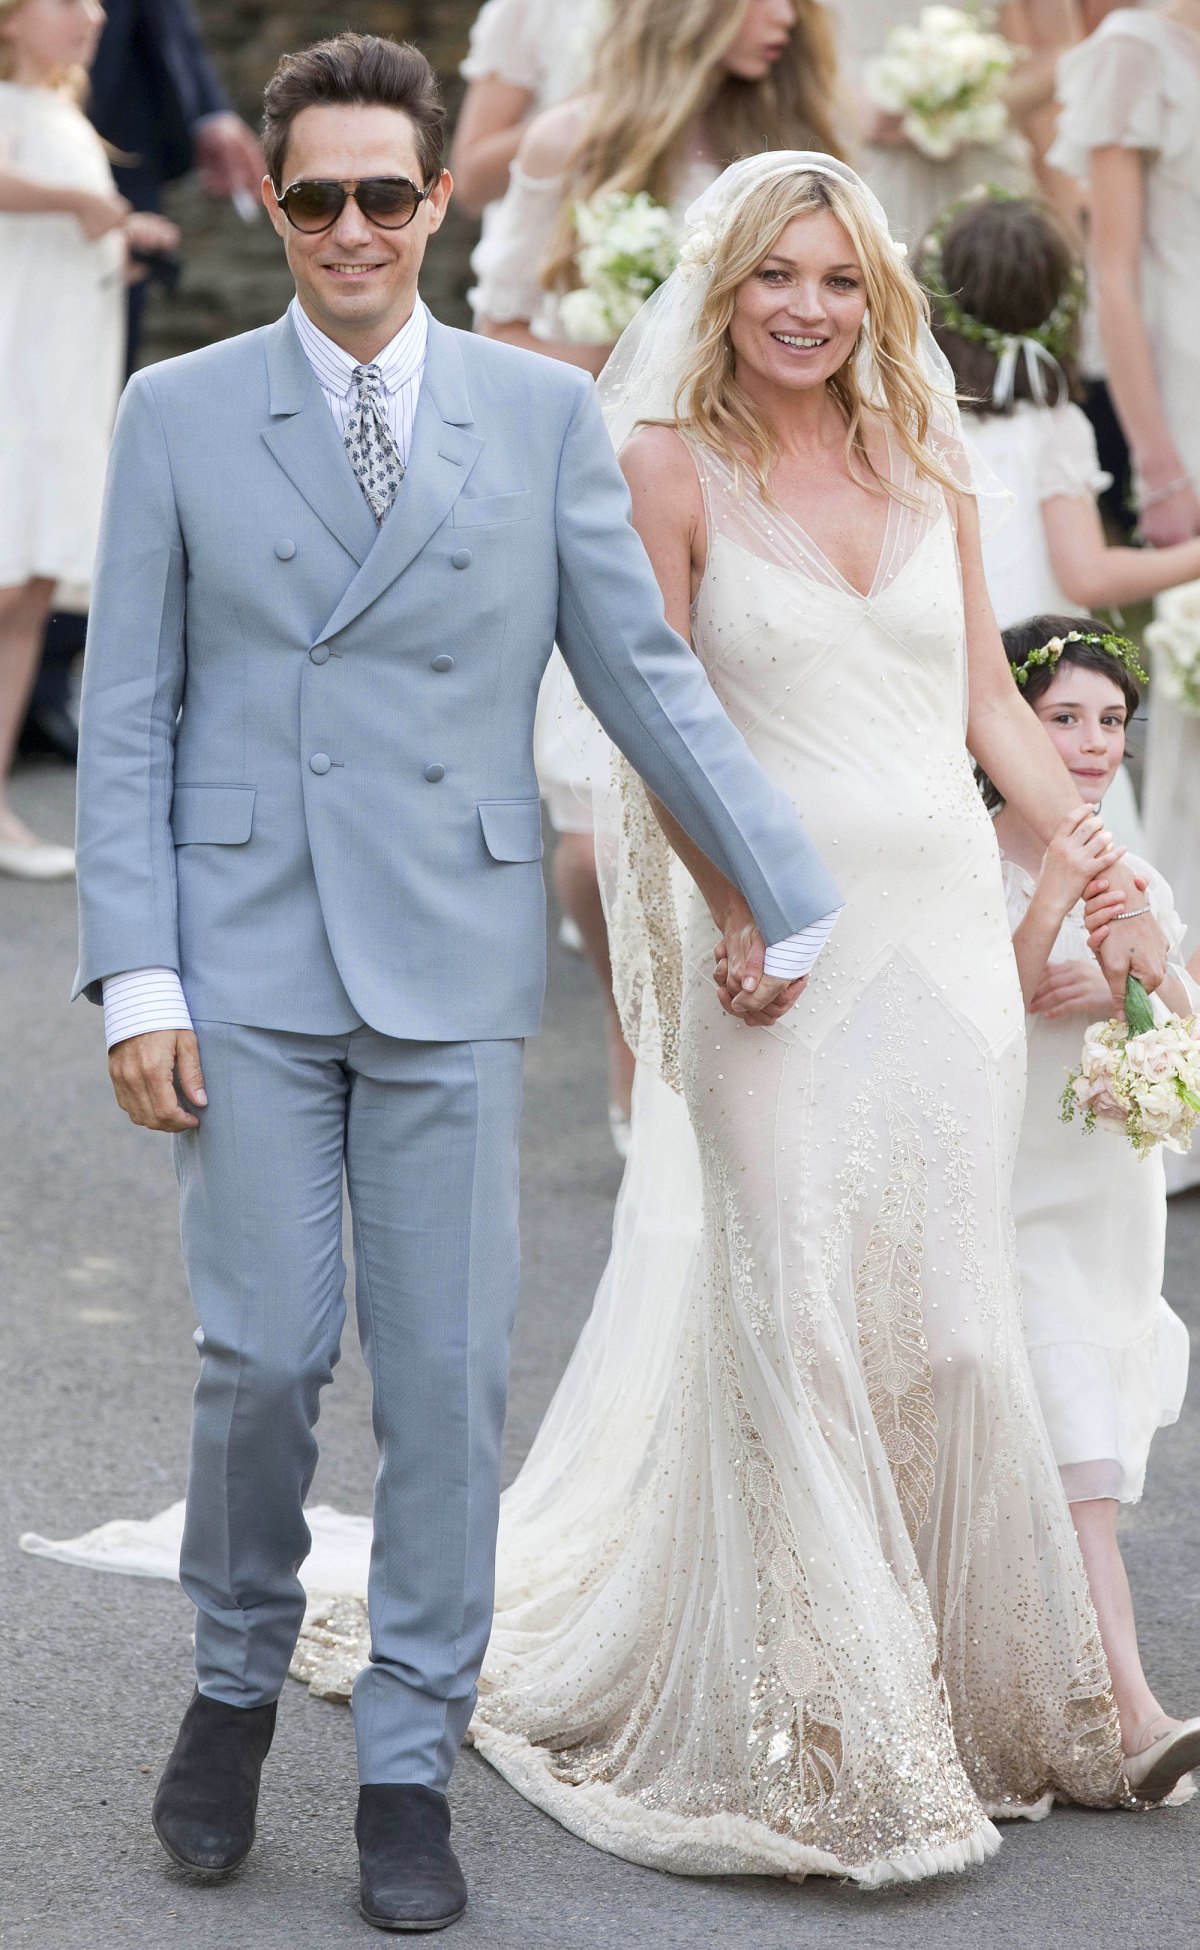 Best Celebrity Weddings Dresses of the 2010s Decade